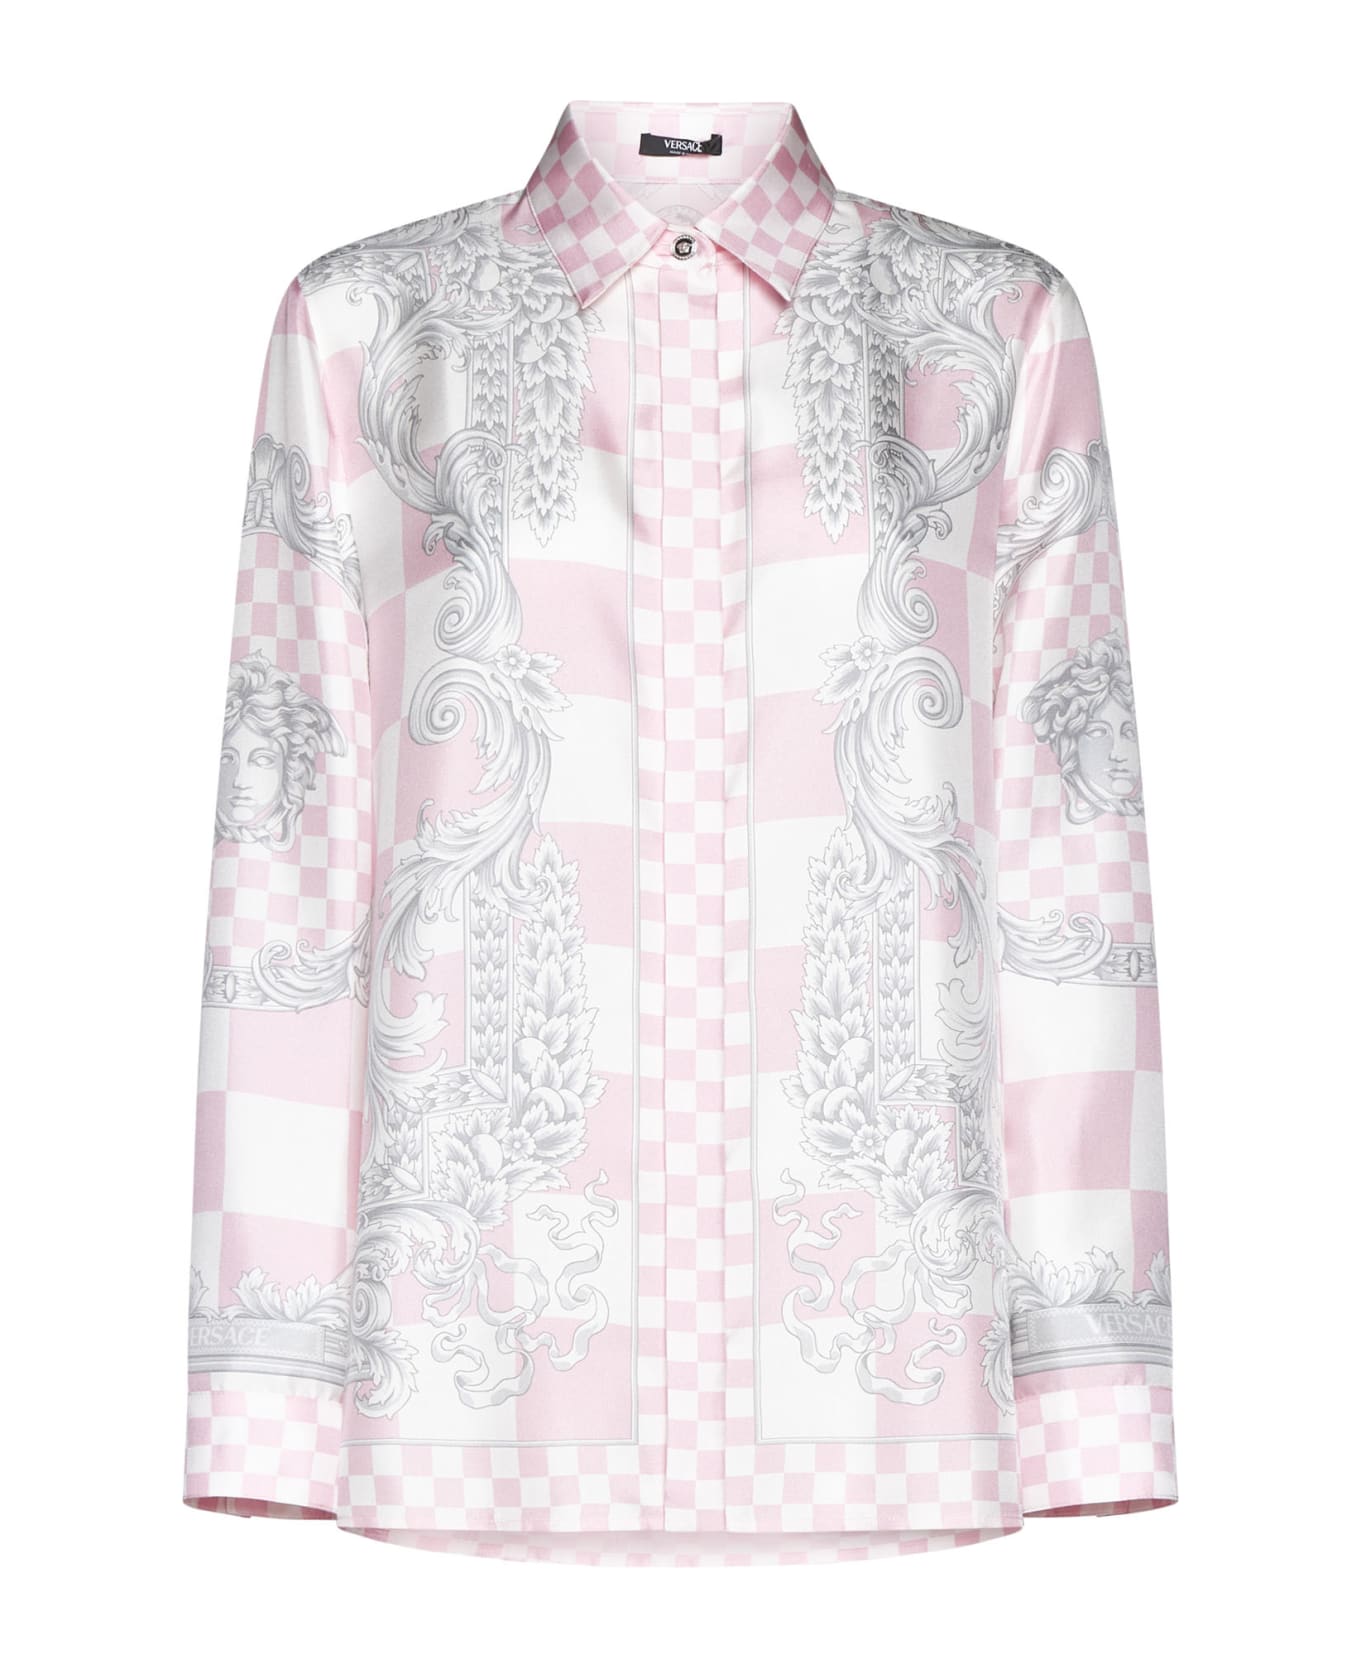 Versace Silk Medusa Contrast Shirt - Pastel pink + white + silver